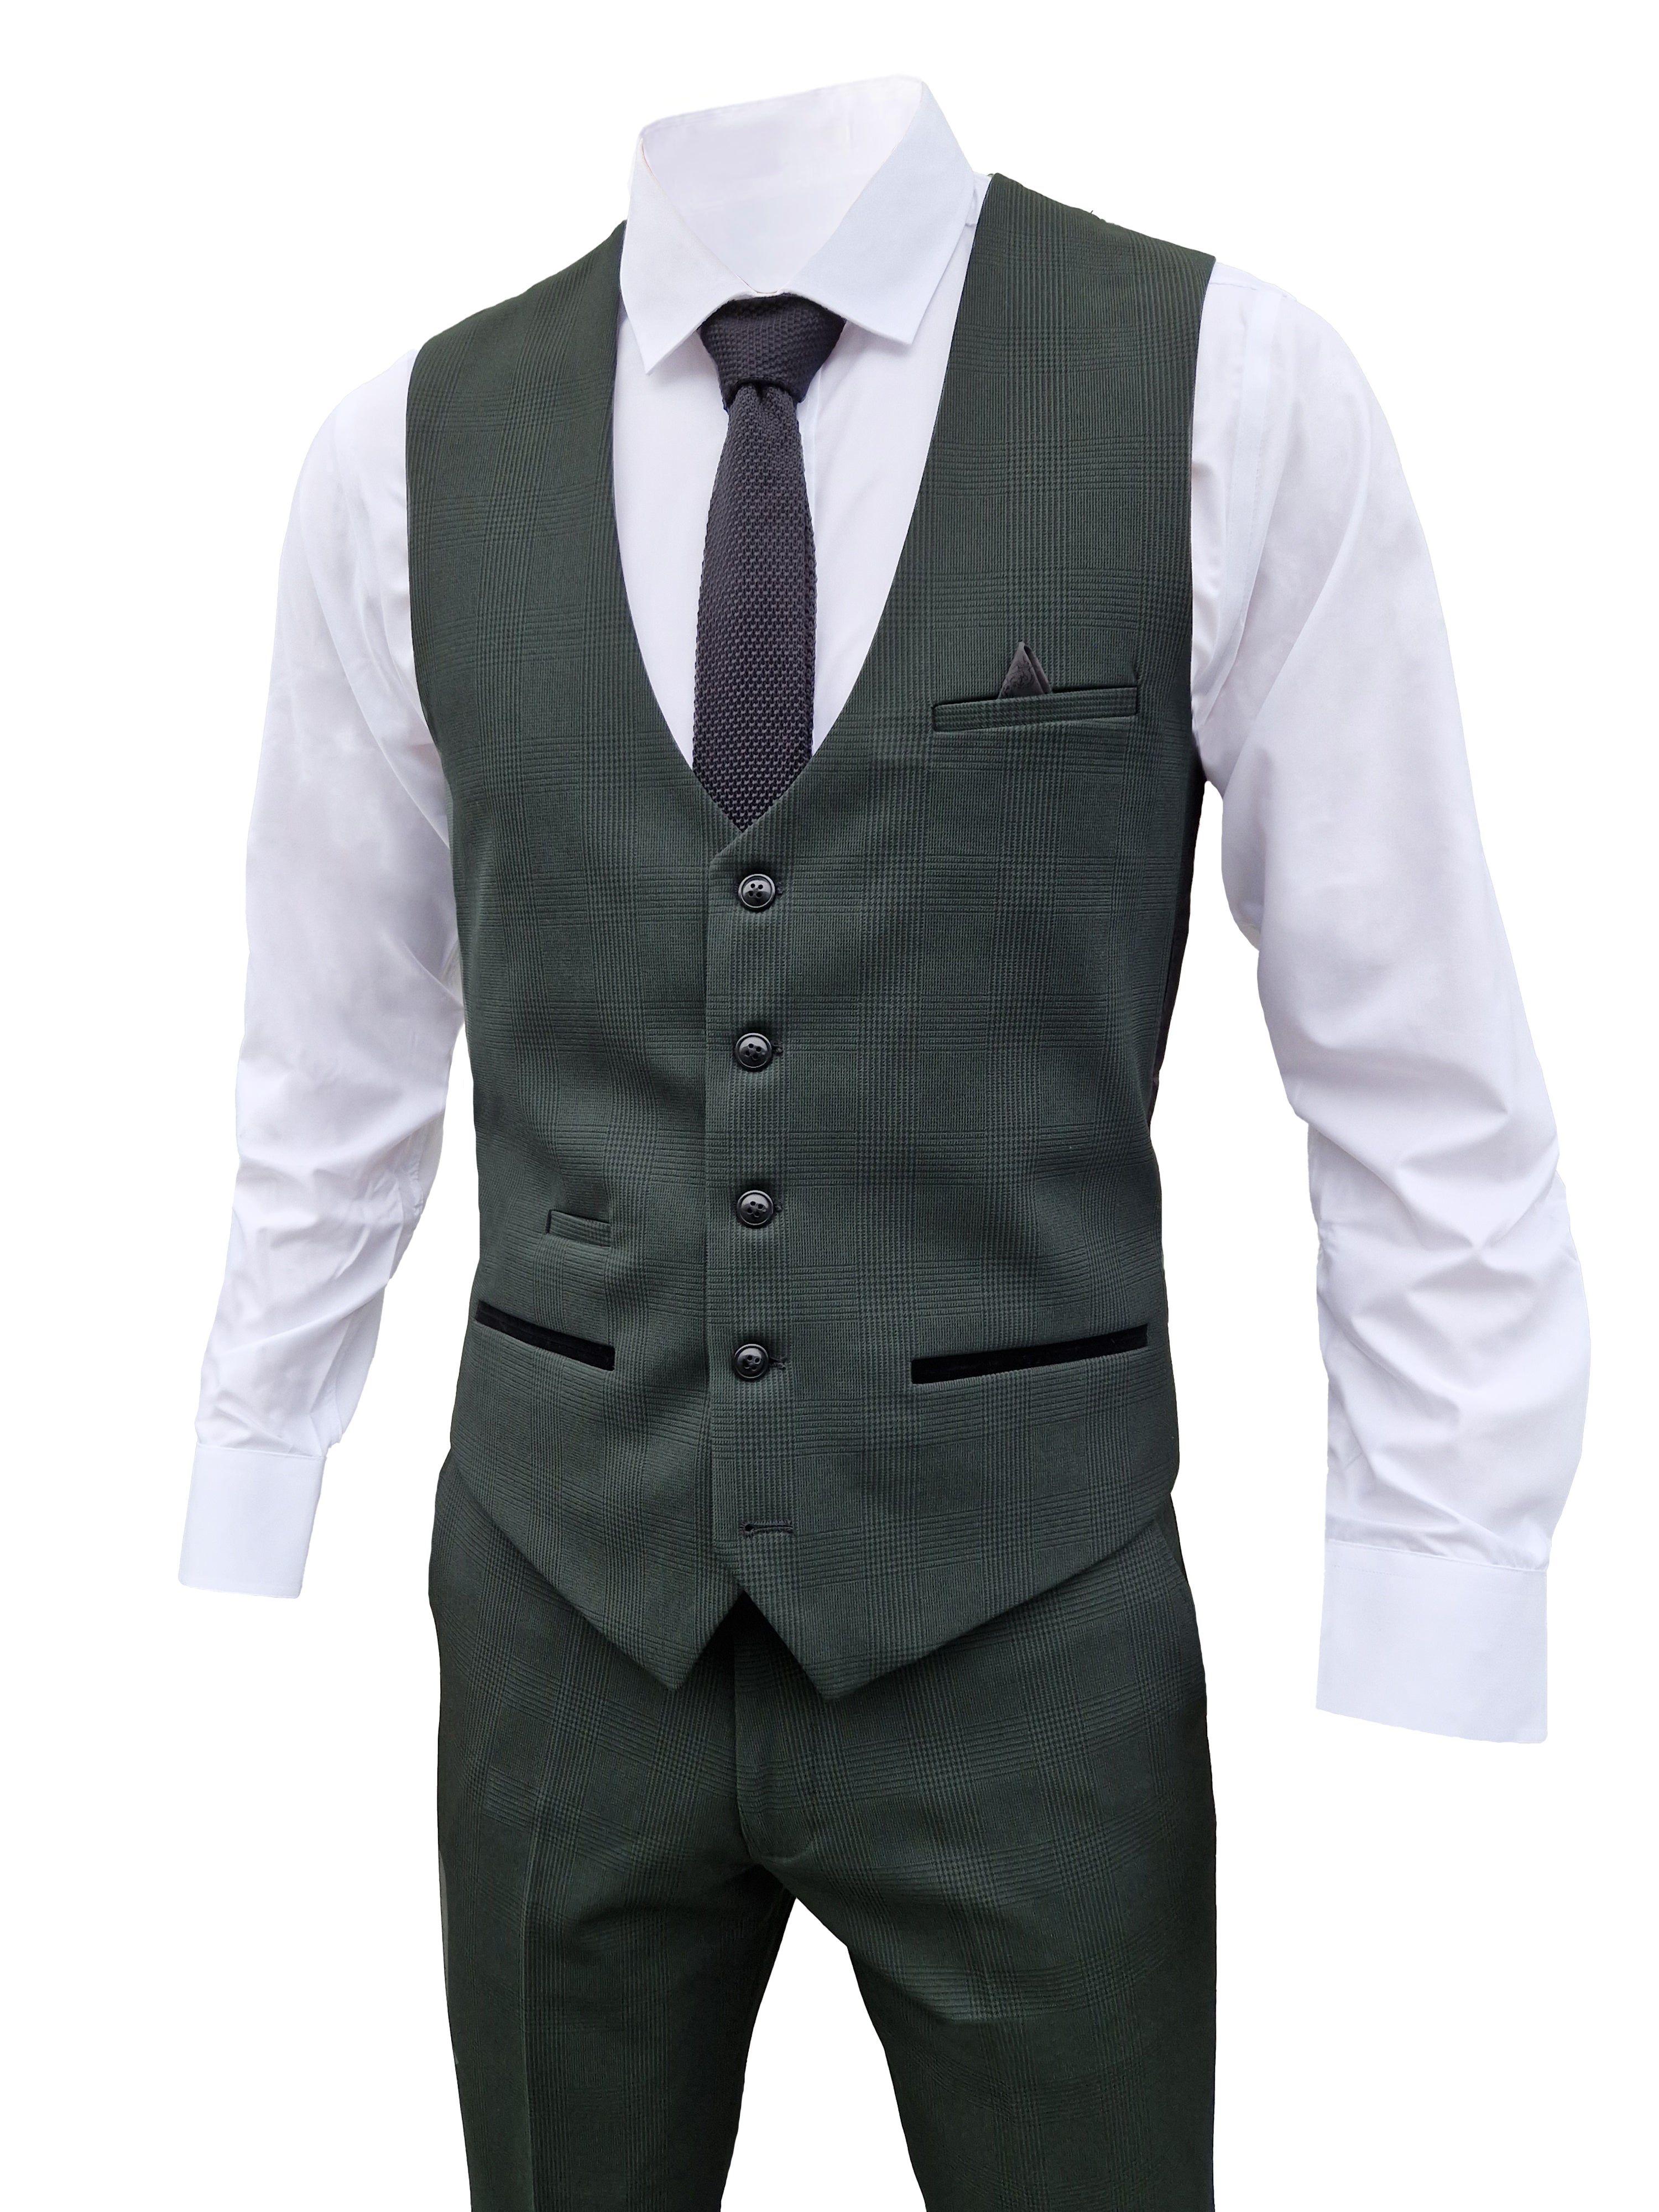 Three-Piece Men's Suit- Marc Darcy Bromley Olive Green suit